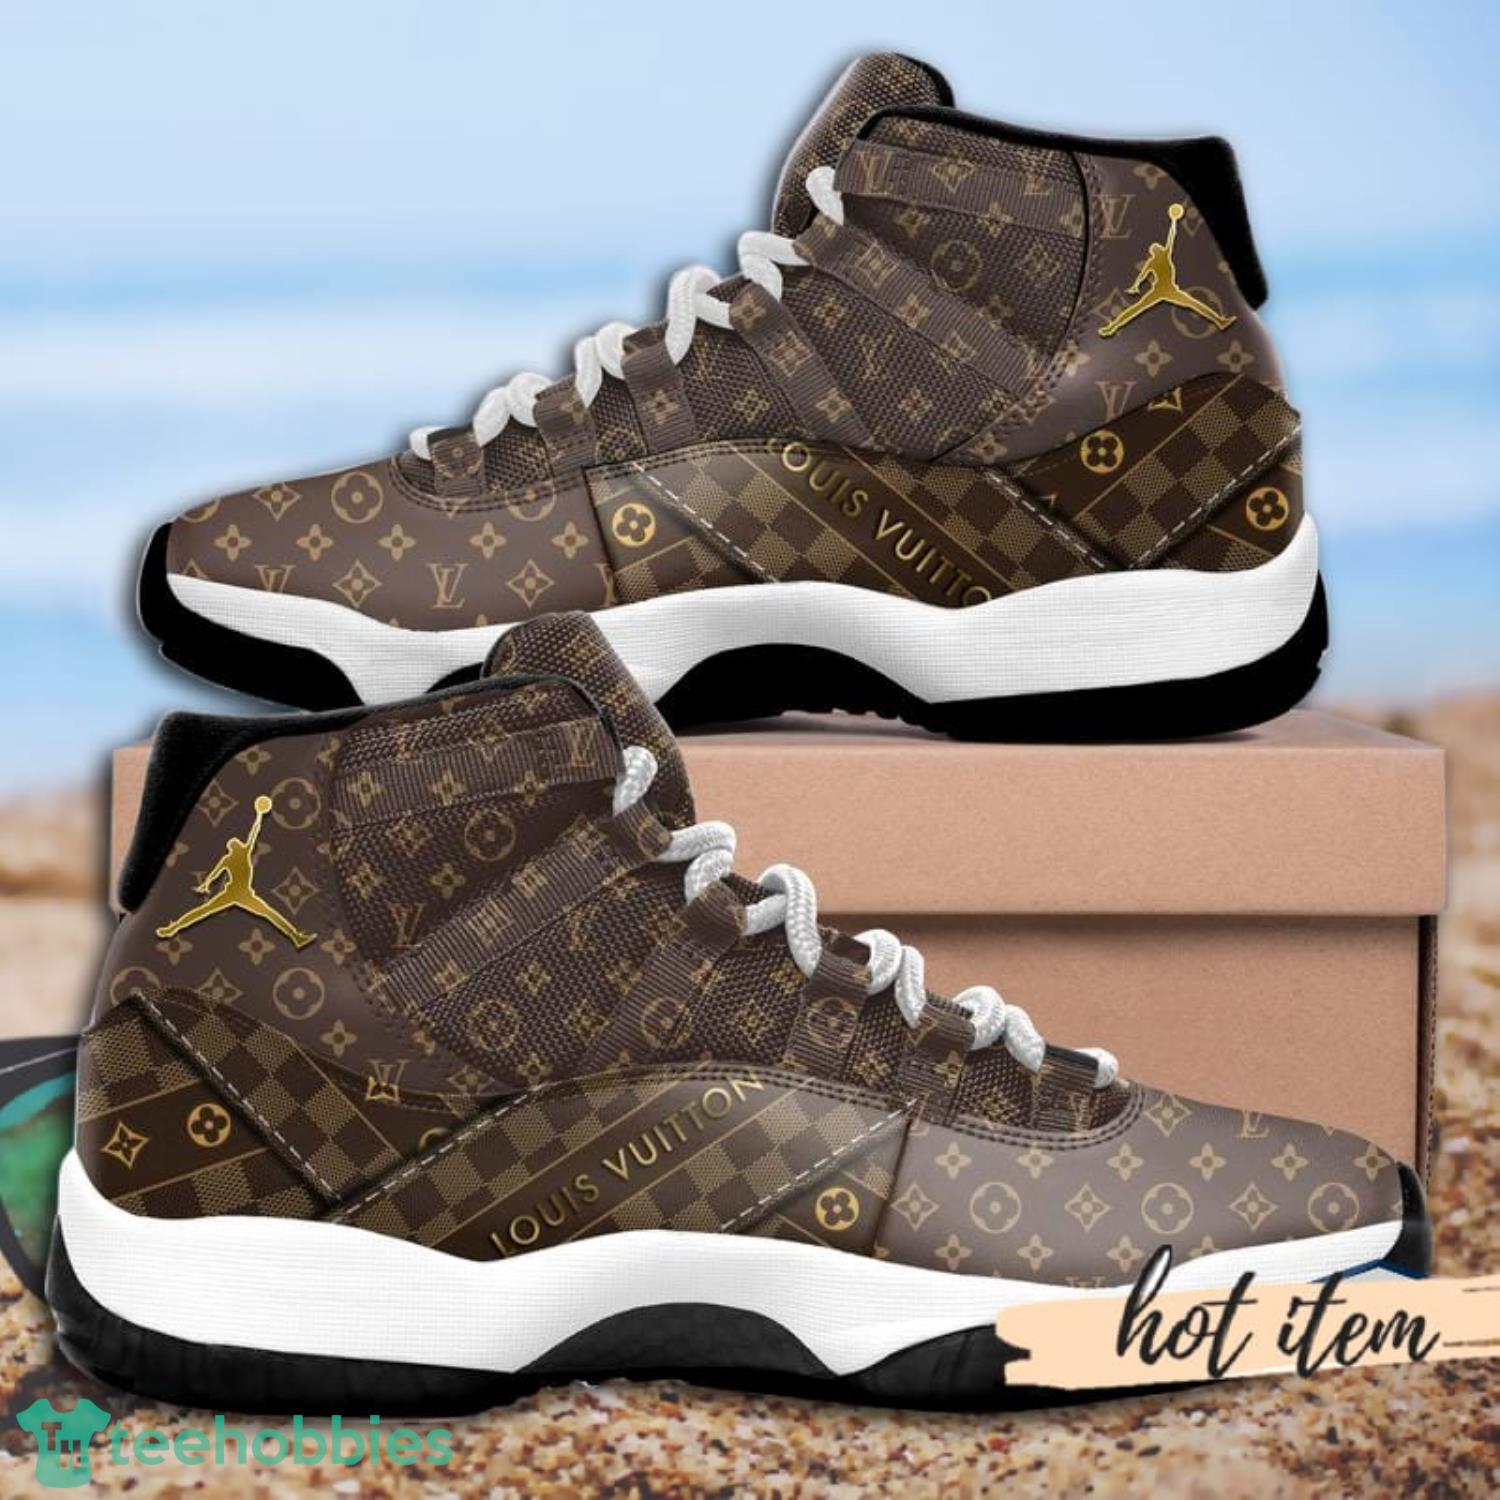 Louis Vuitton Air Jordan 11 Shoes Sneaker Style 01